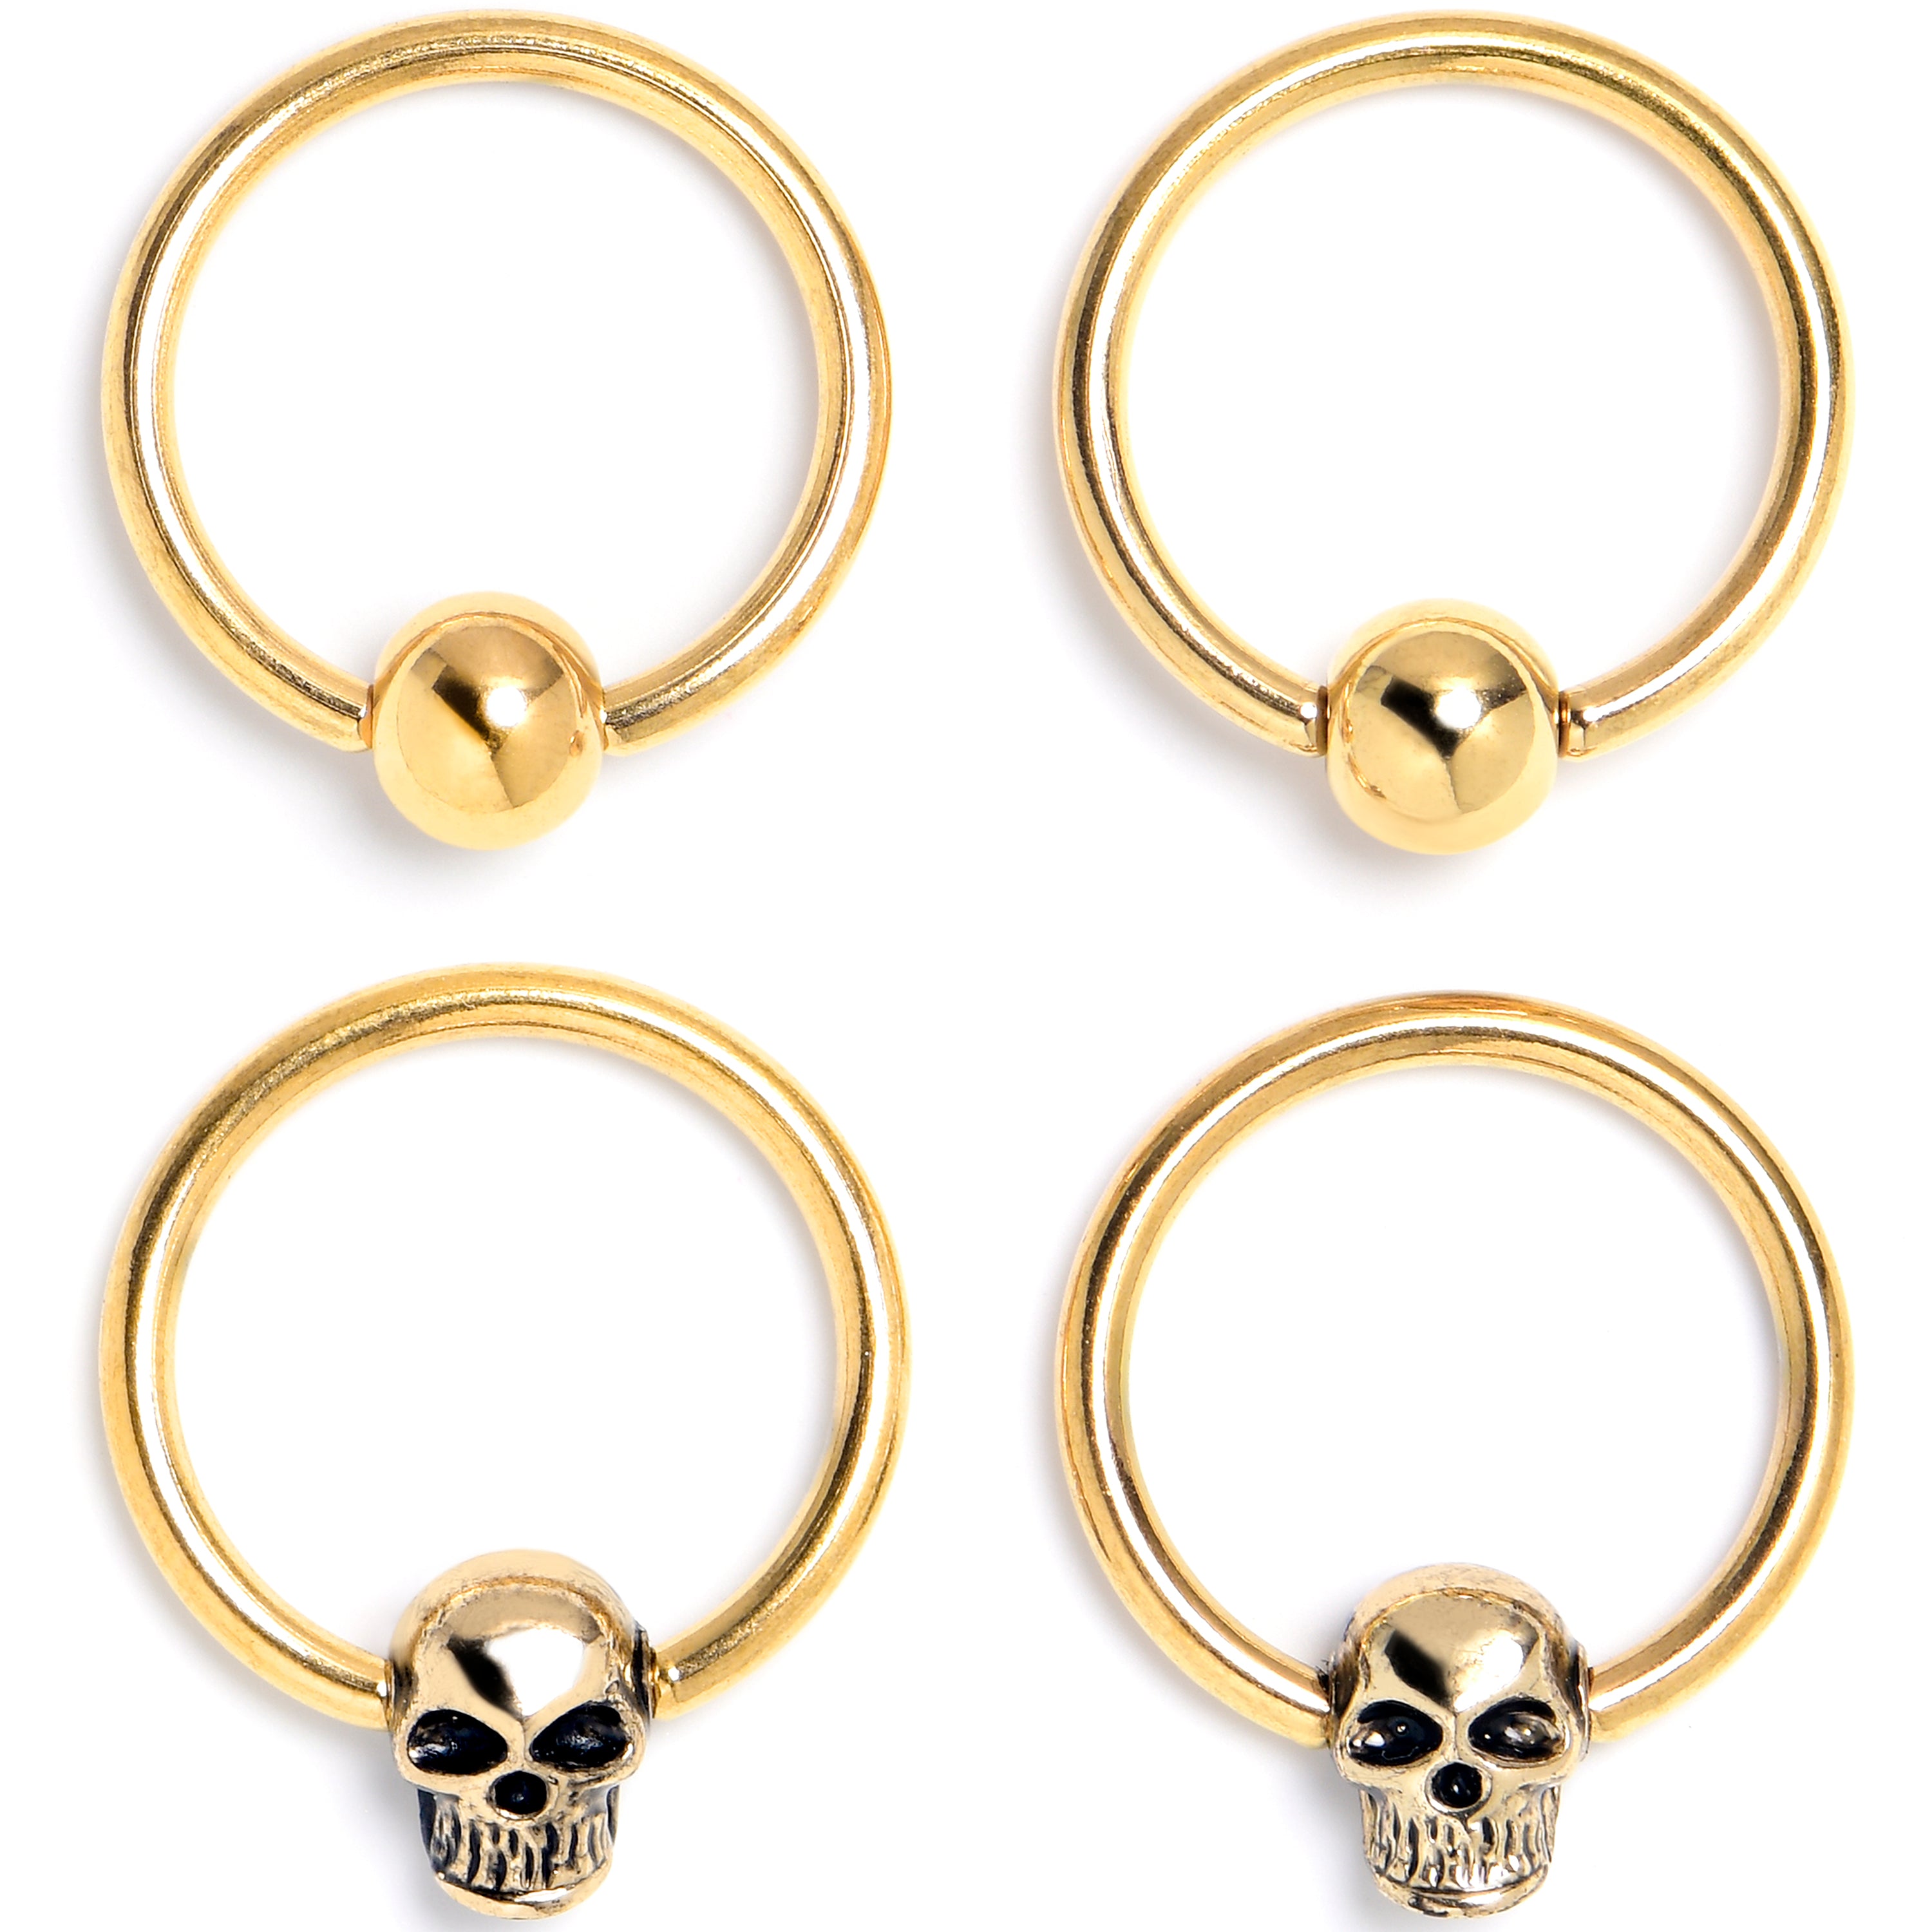 16 Gauge 3/8 Gold Tone Gothic Skulls BCR Captive Ring Set of 4